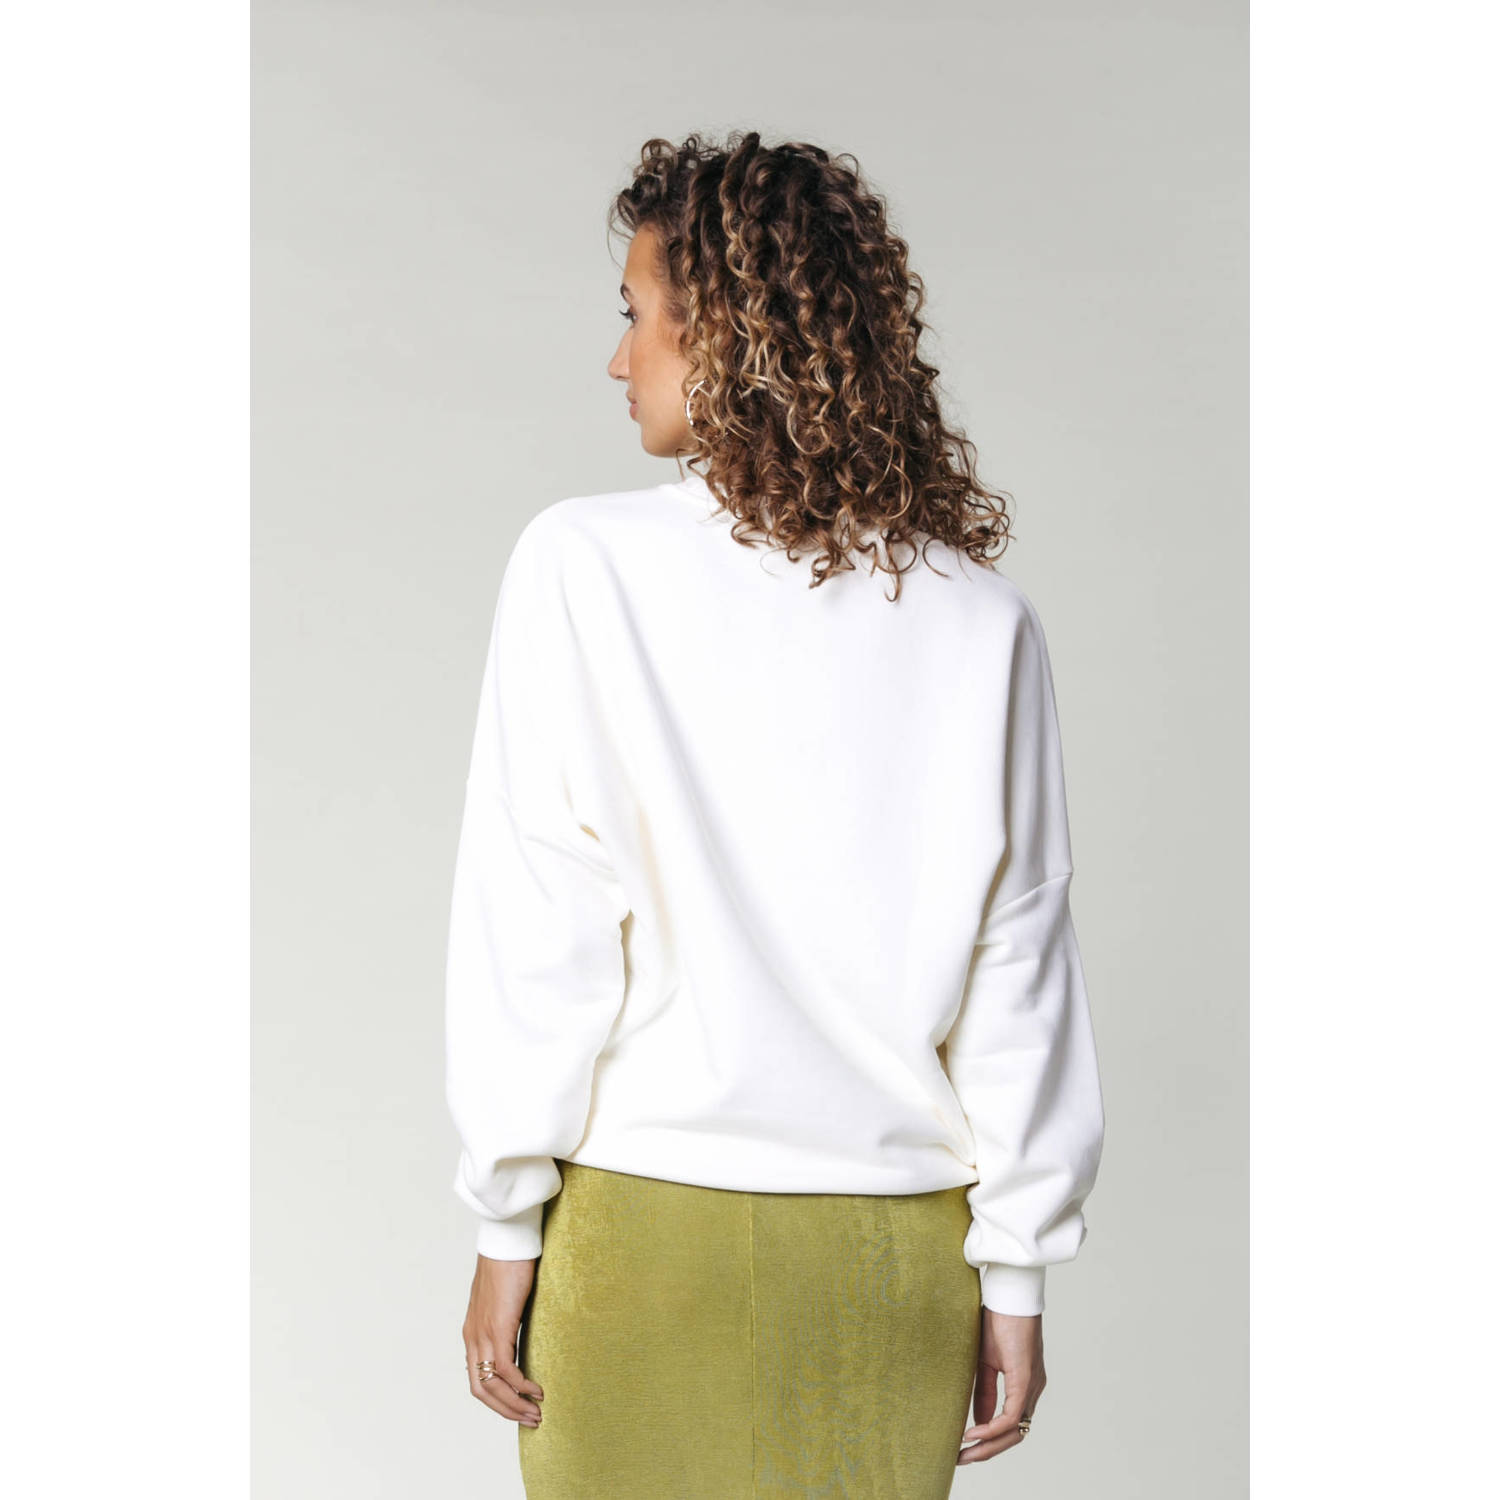 Colourful Rebel sweater CR Curly met printopdruk wit limegroen